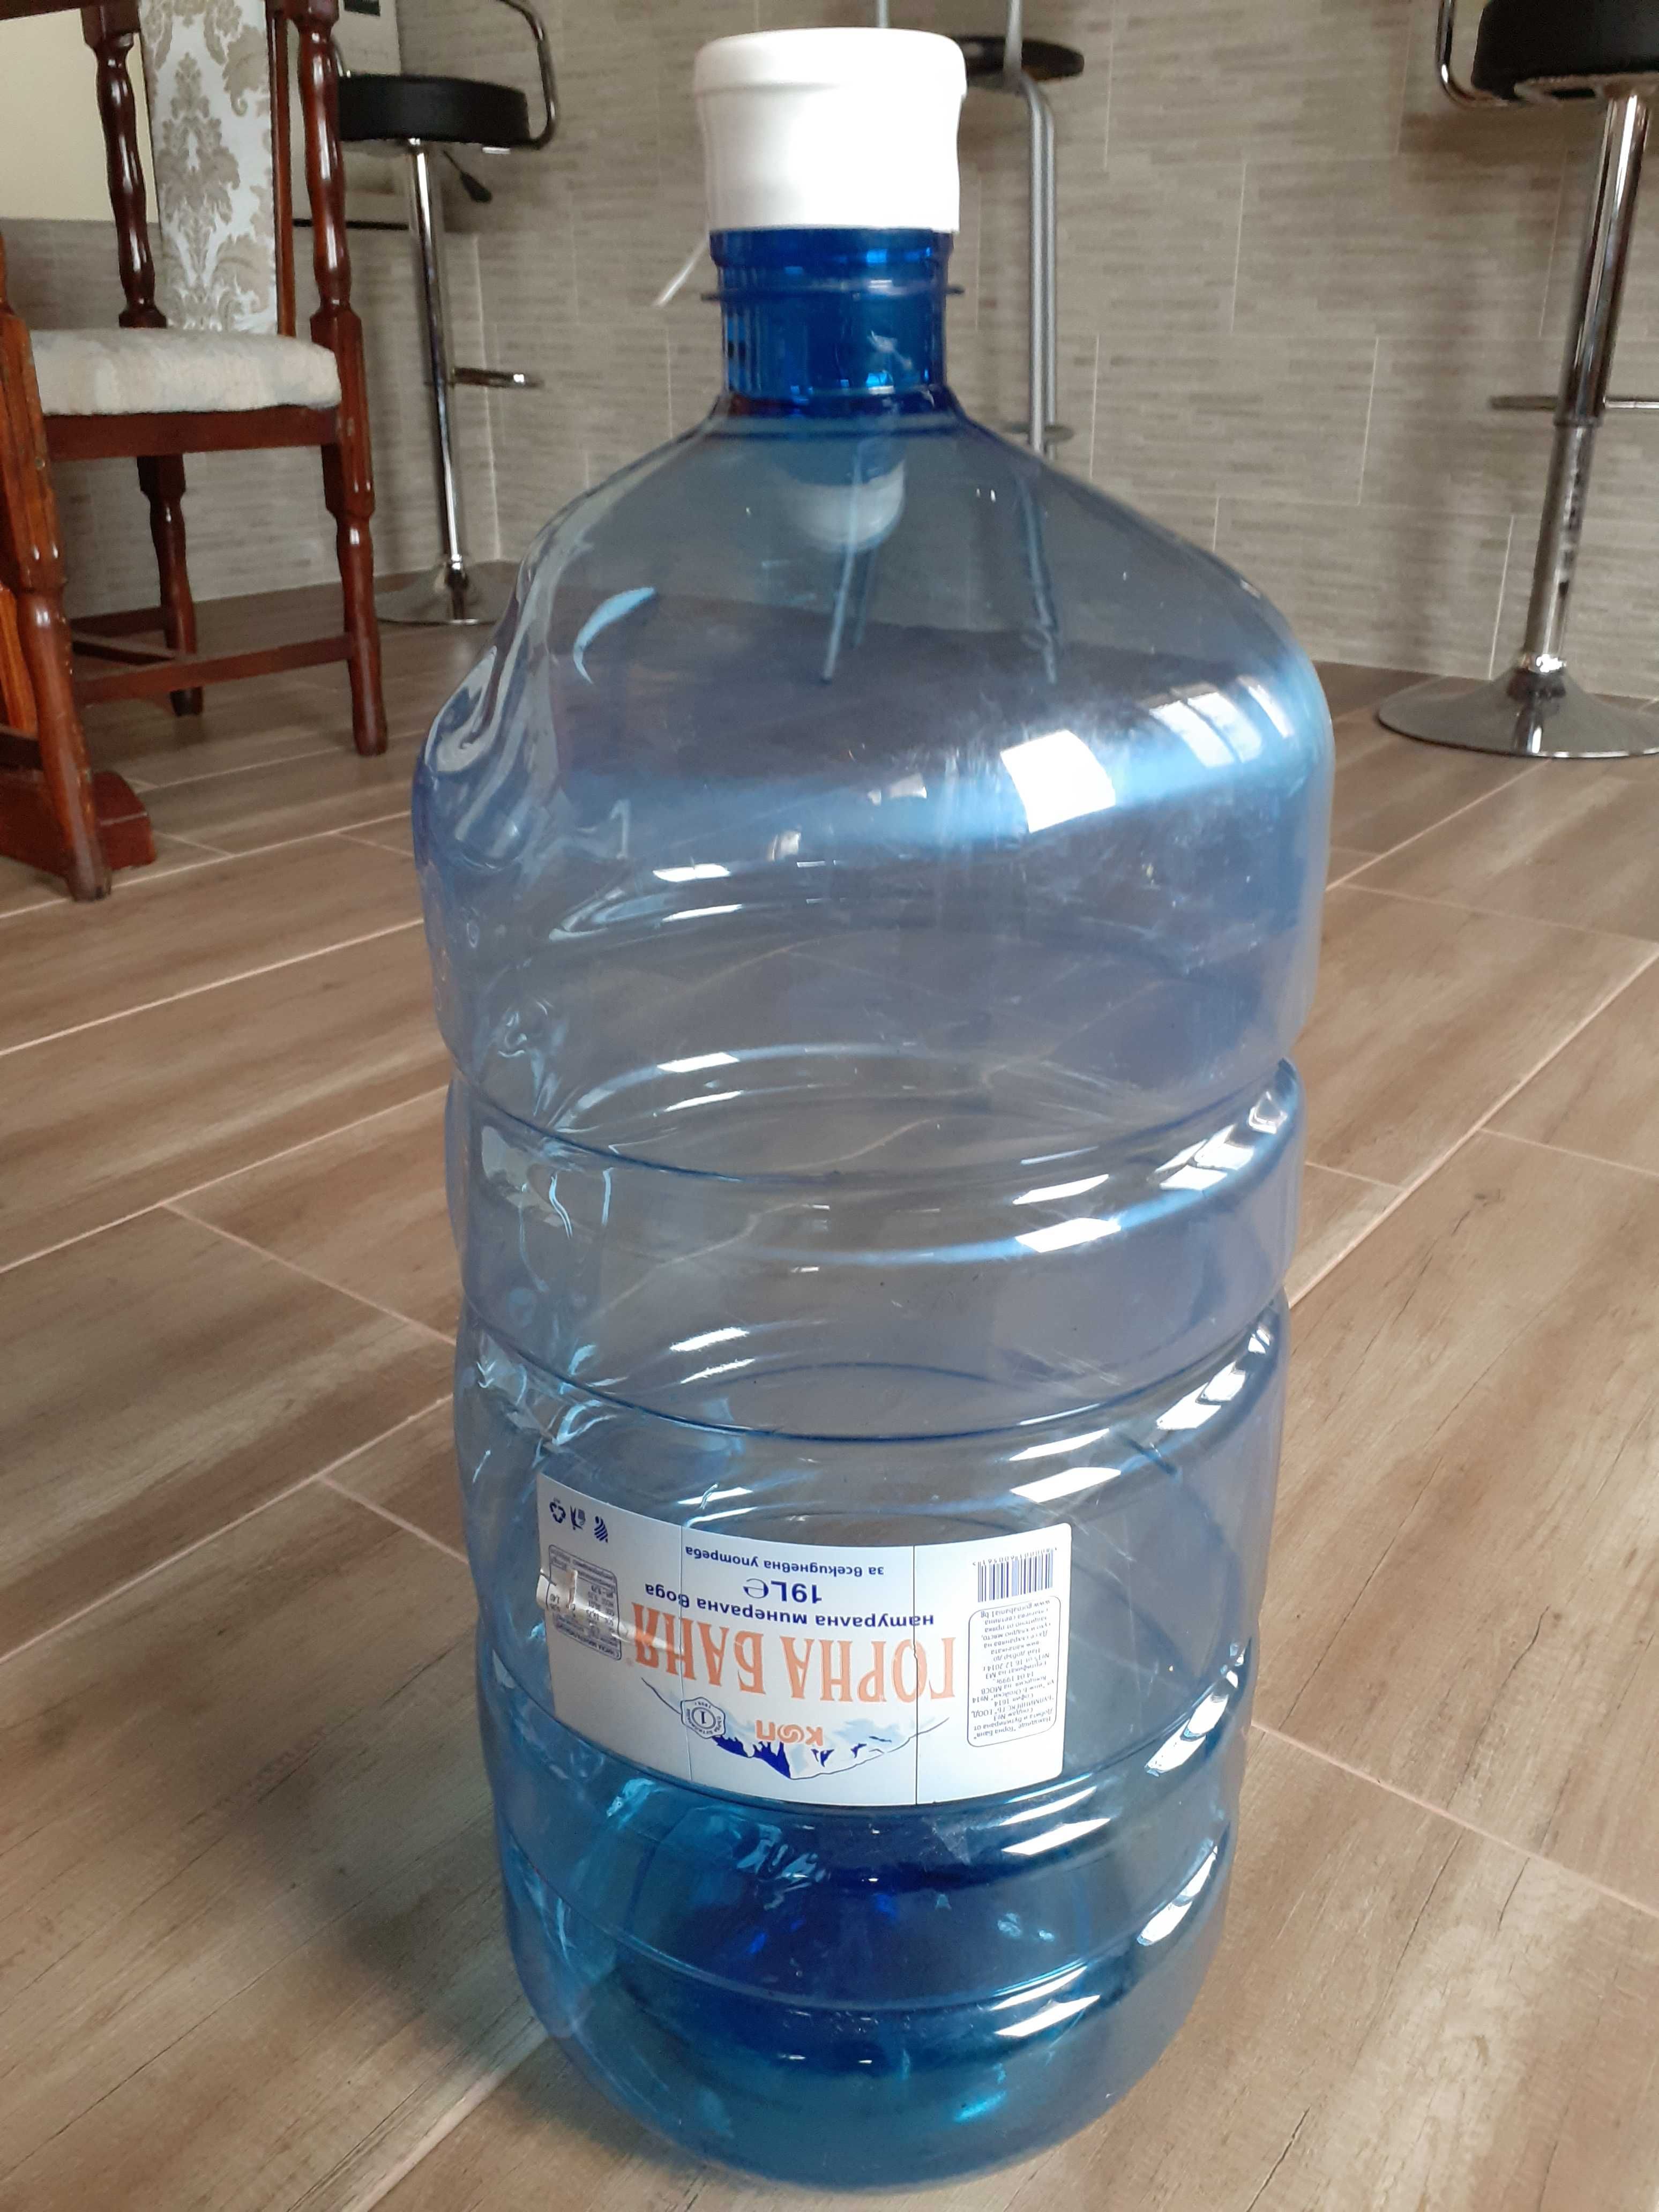 Галон за минерална вода 19 литра за многократна употреба